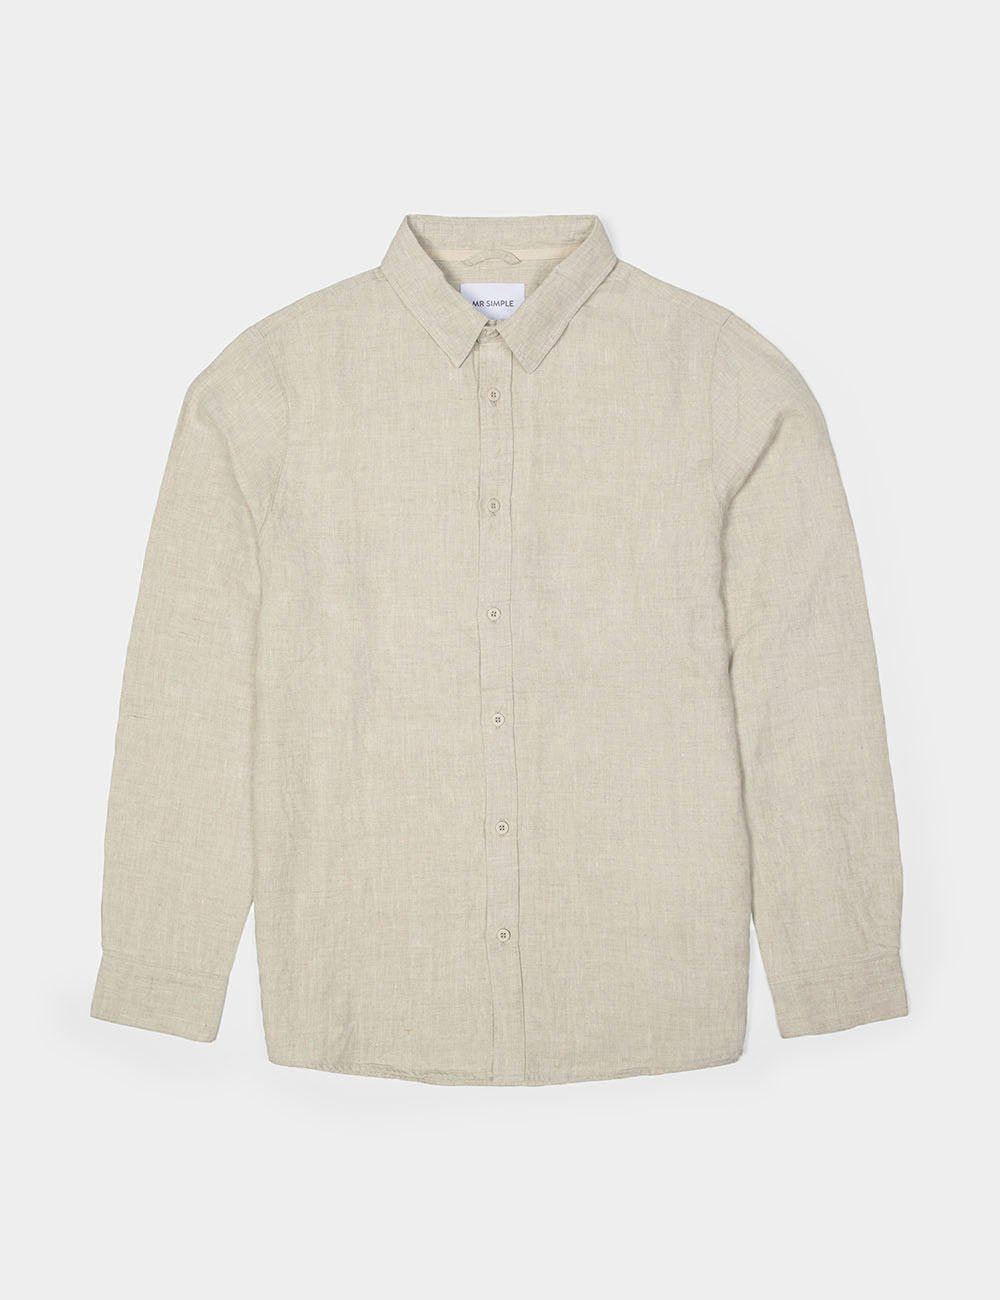 Mr Simple - Linen LS Shirt - Natural